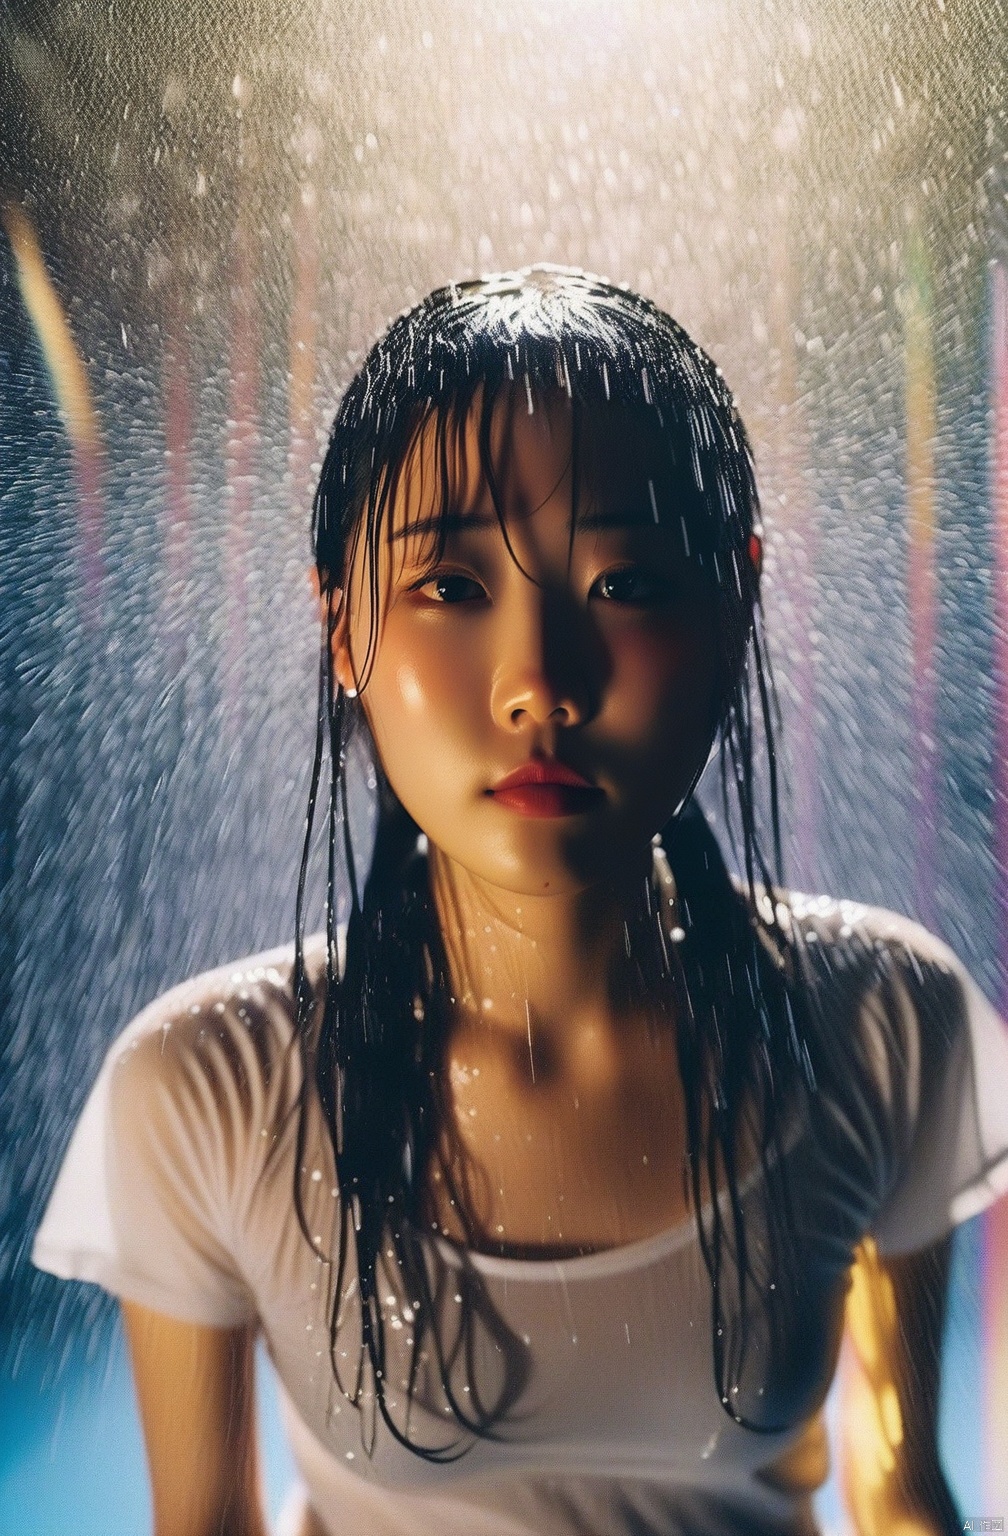  photographic of a Chinese girl wet T-shirt water drops, splash detailed, surreal dramatic lighting shadow (lofi, analog), kodak film by Brandon Woelfel Ryan McGinley